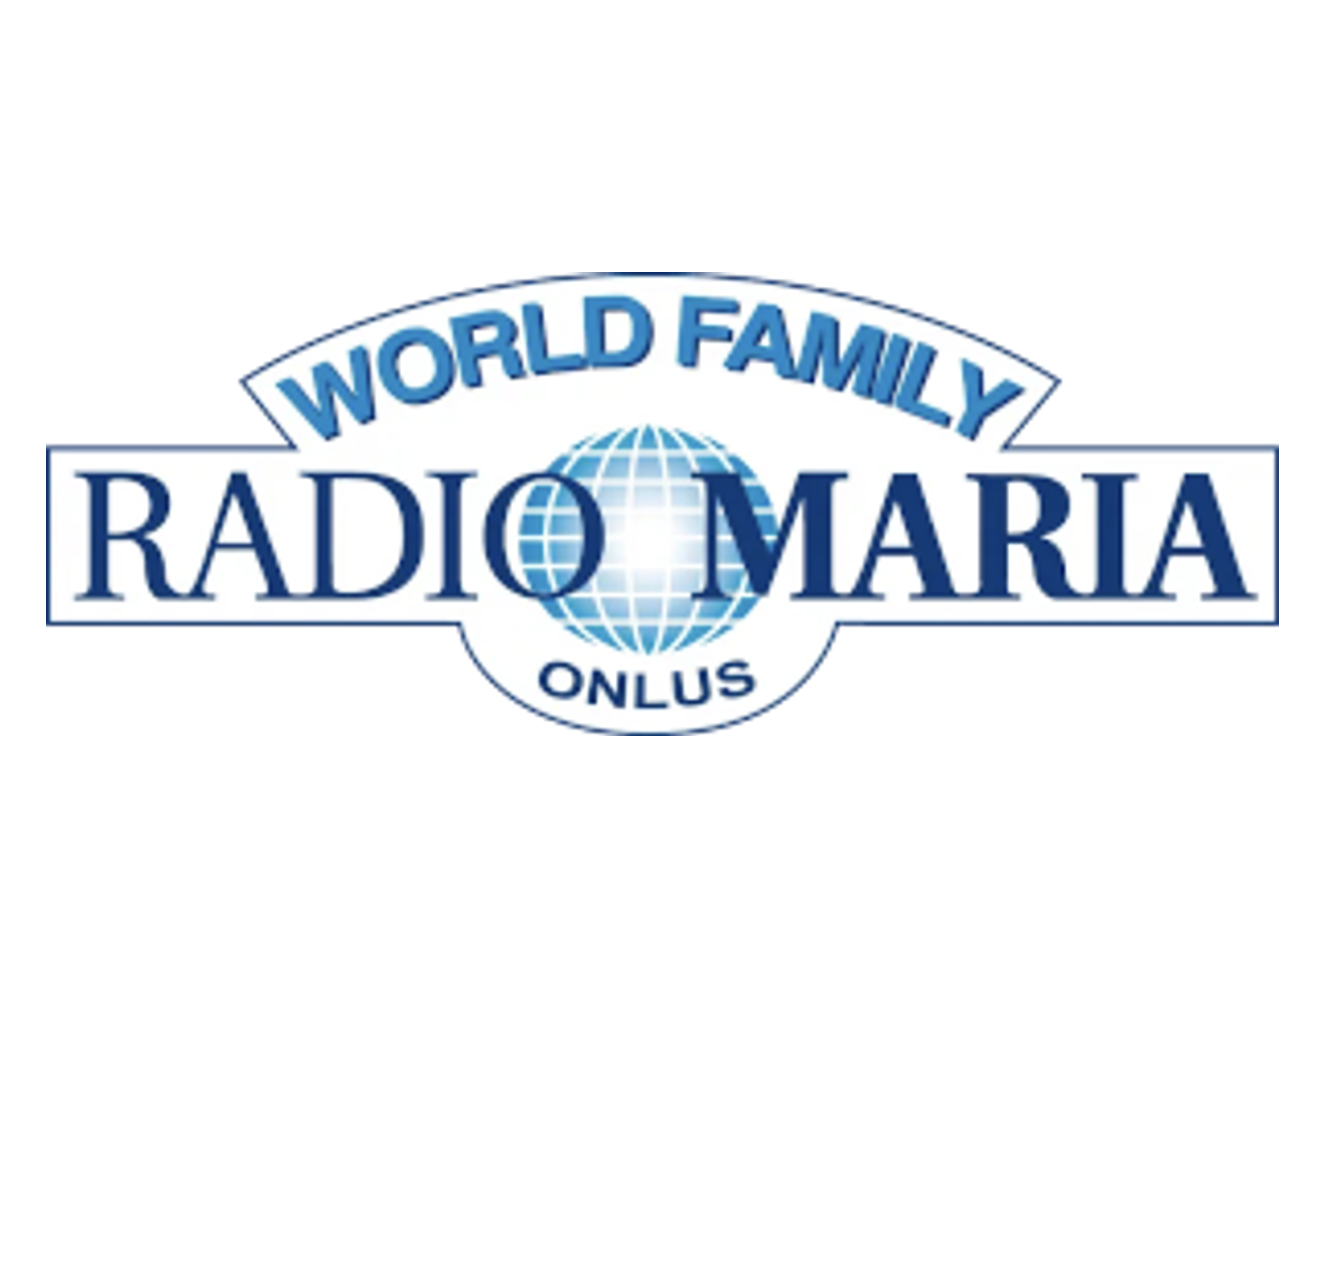 RADIO MARIA INTERVIEW - WITH HELENA JUDD